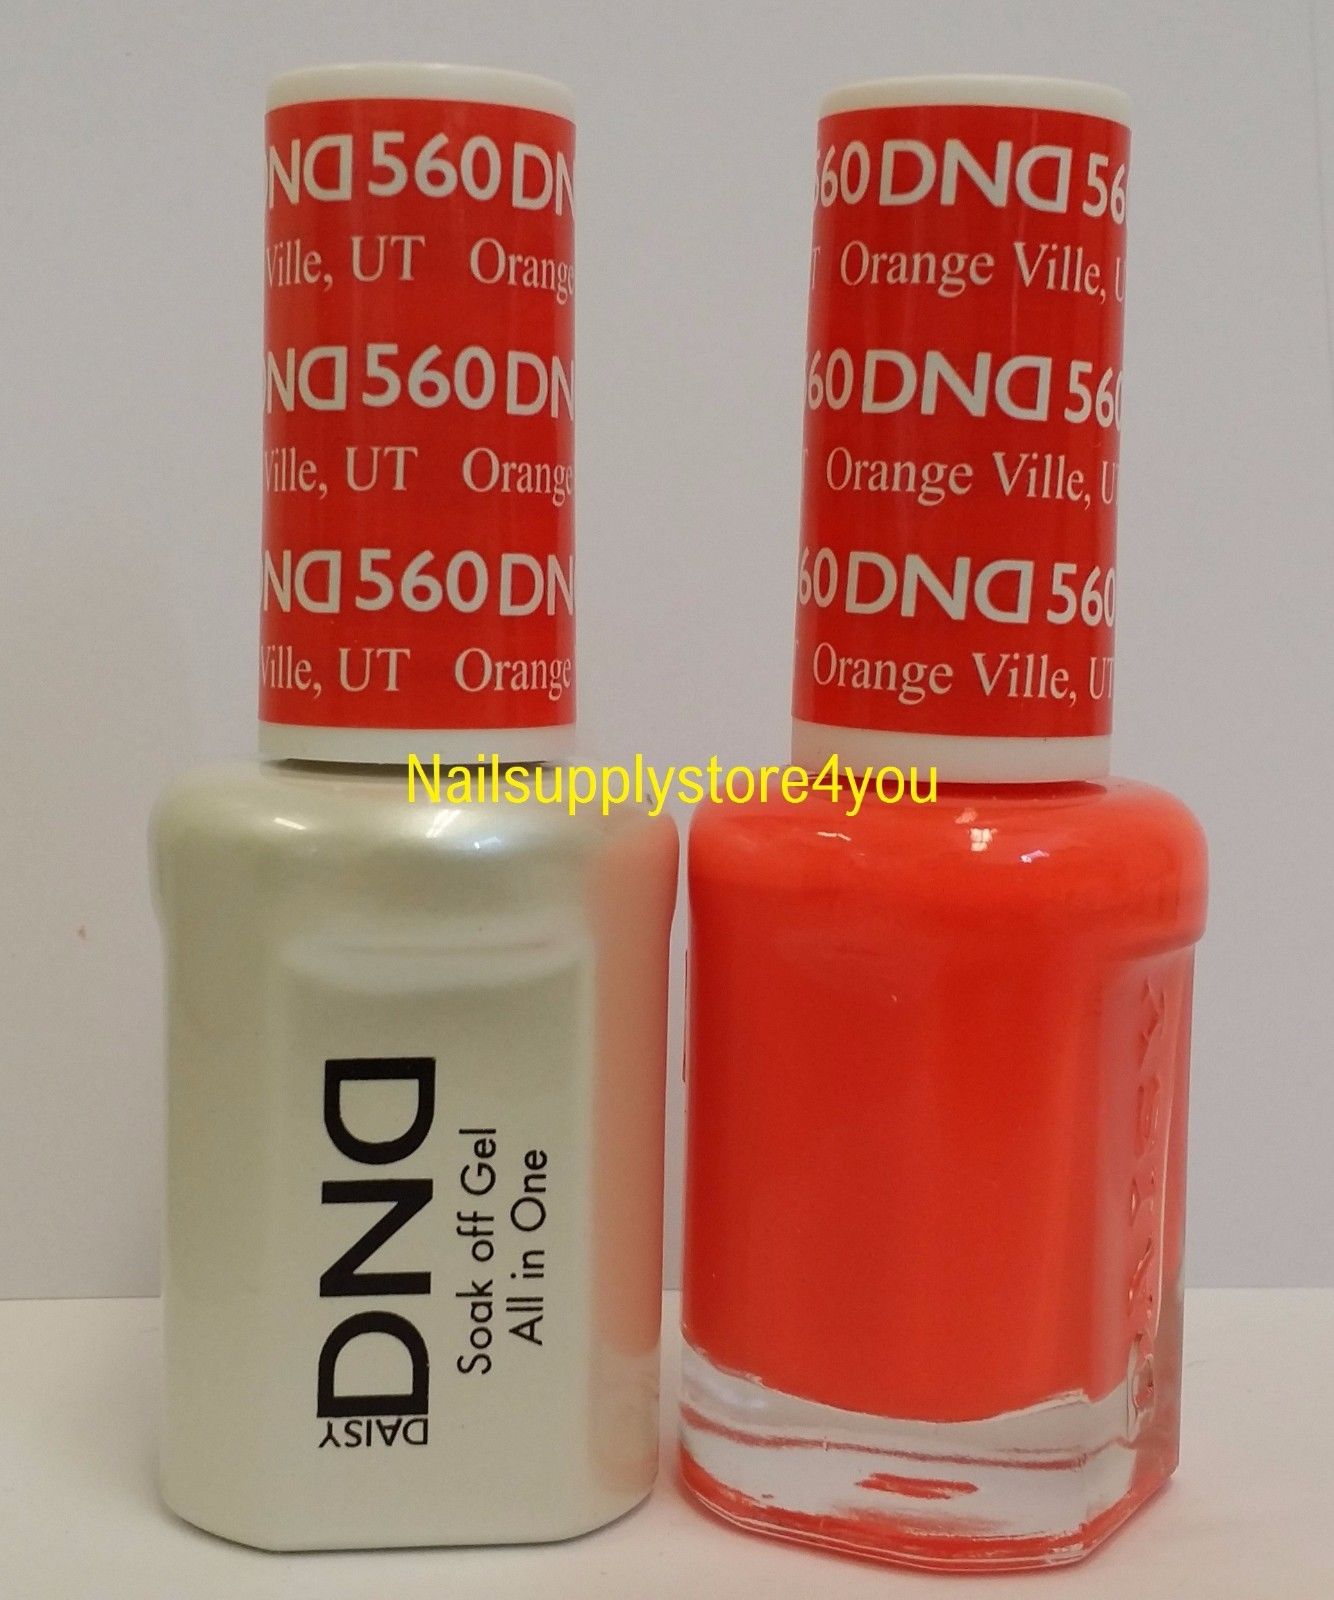 DND Duo Soak off Gel Color - (#550 - #581) - Choose Your Favorite colors